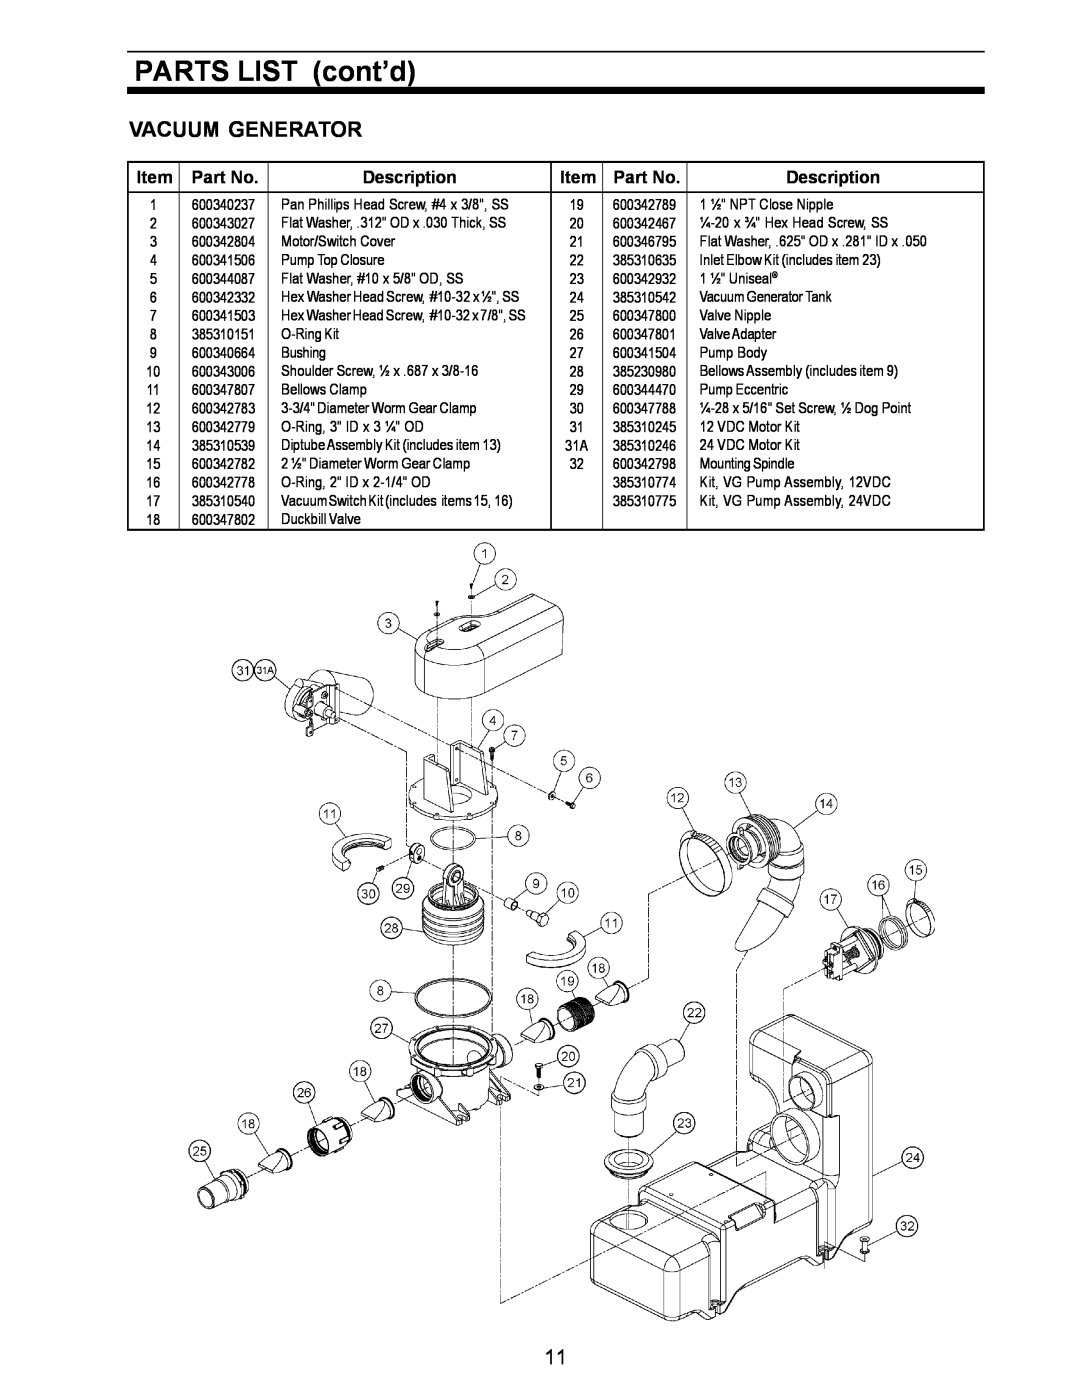 Dometic SANITATION SYSTEM owner manual PARTS LIST cont’d, Vacuum Generator, Description 